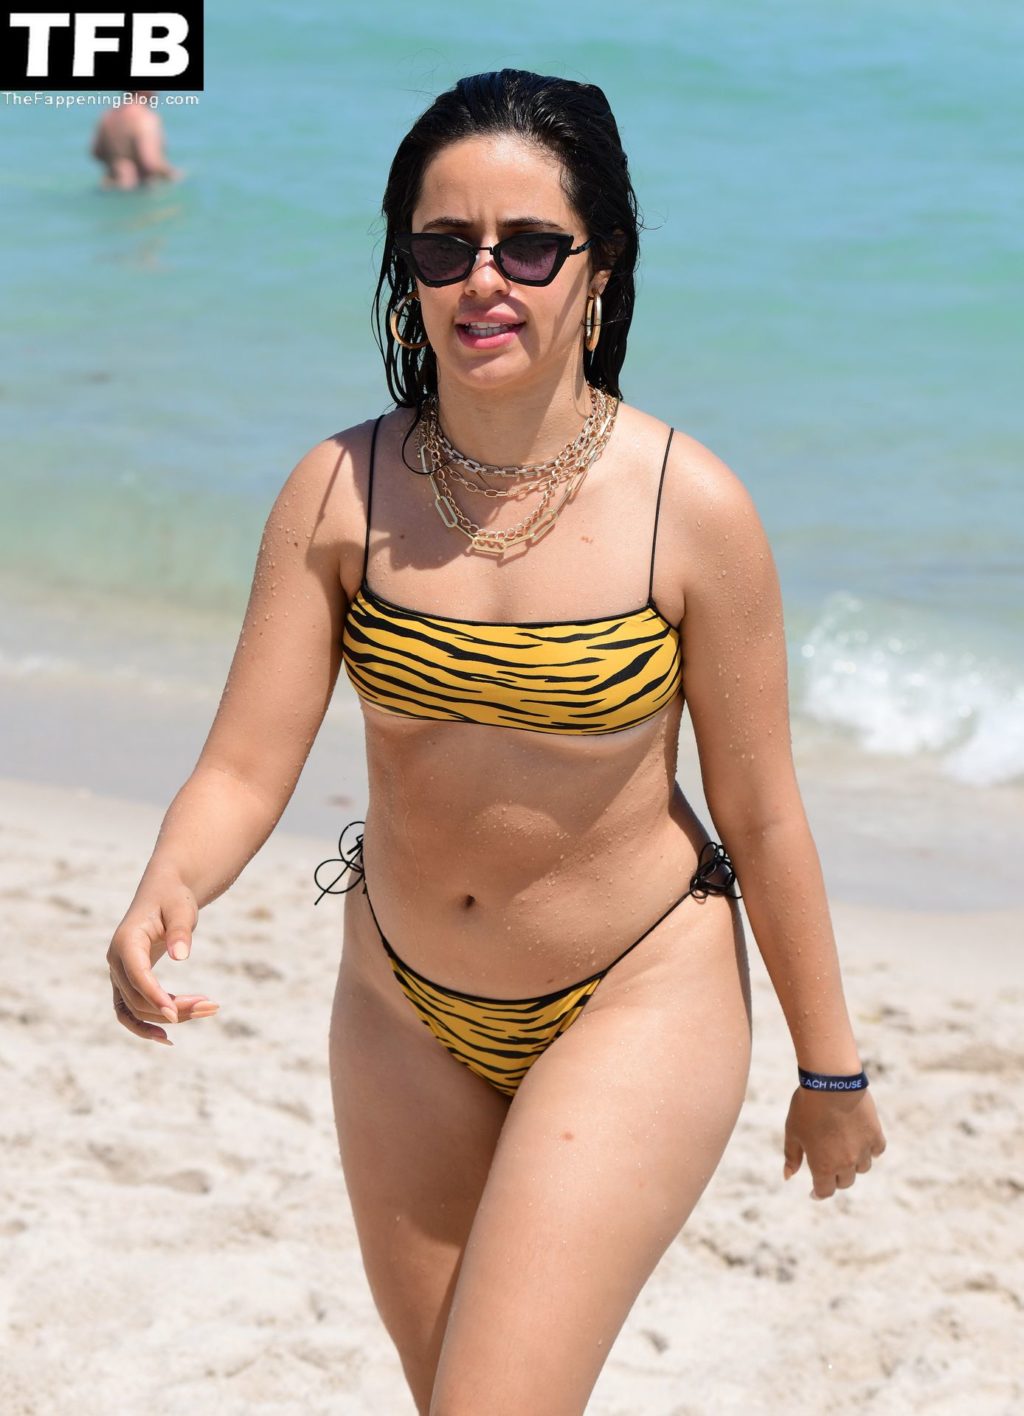 Camila Cabello Sexy The Fappening Blog 43 1024x1416 - Camila Cabello Displays Her Summer-Ready Body in Miami (108 Photos)